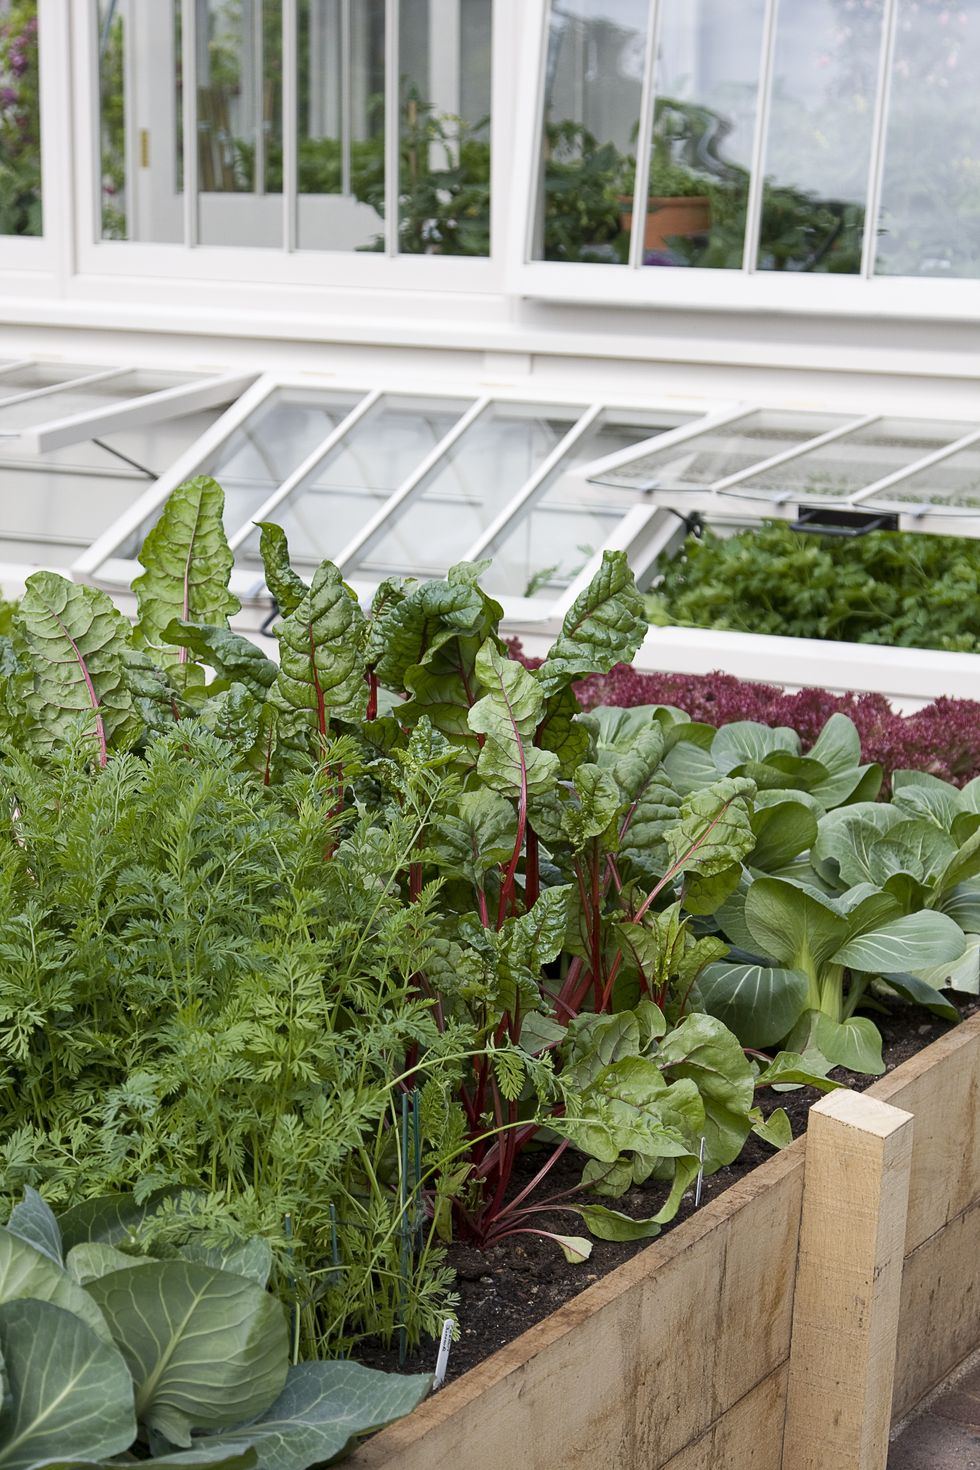 raised vegetable garden bed